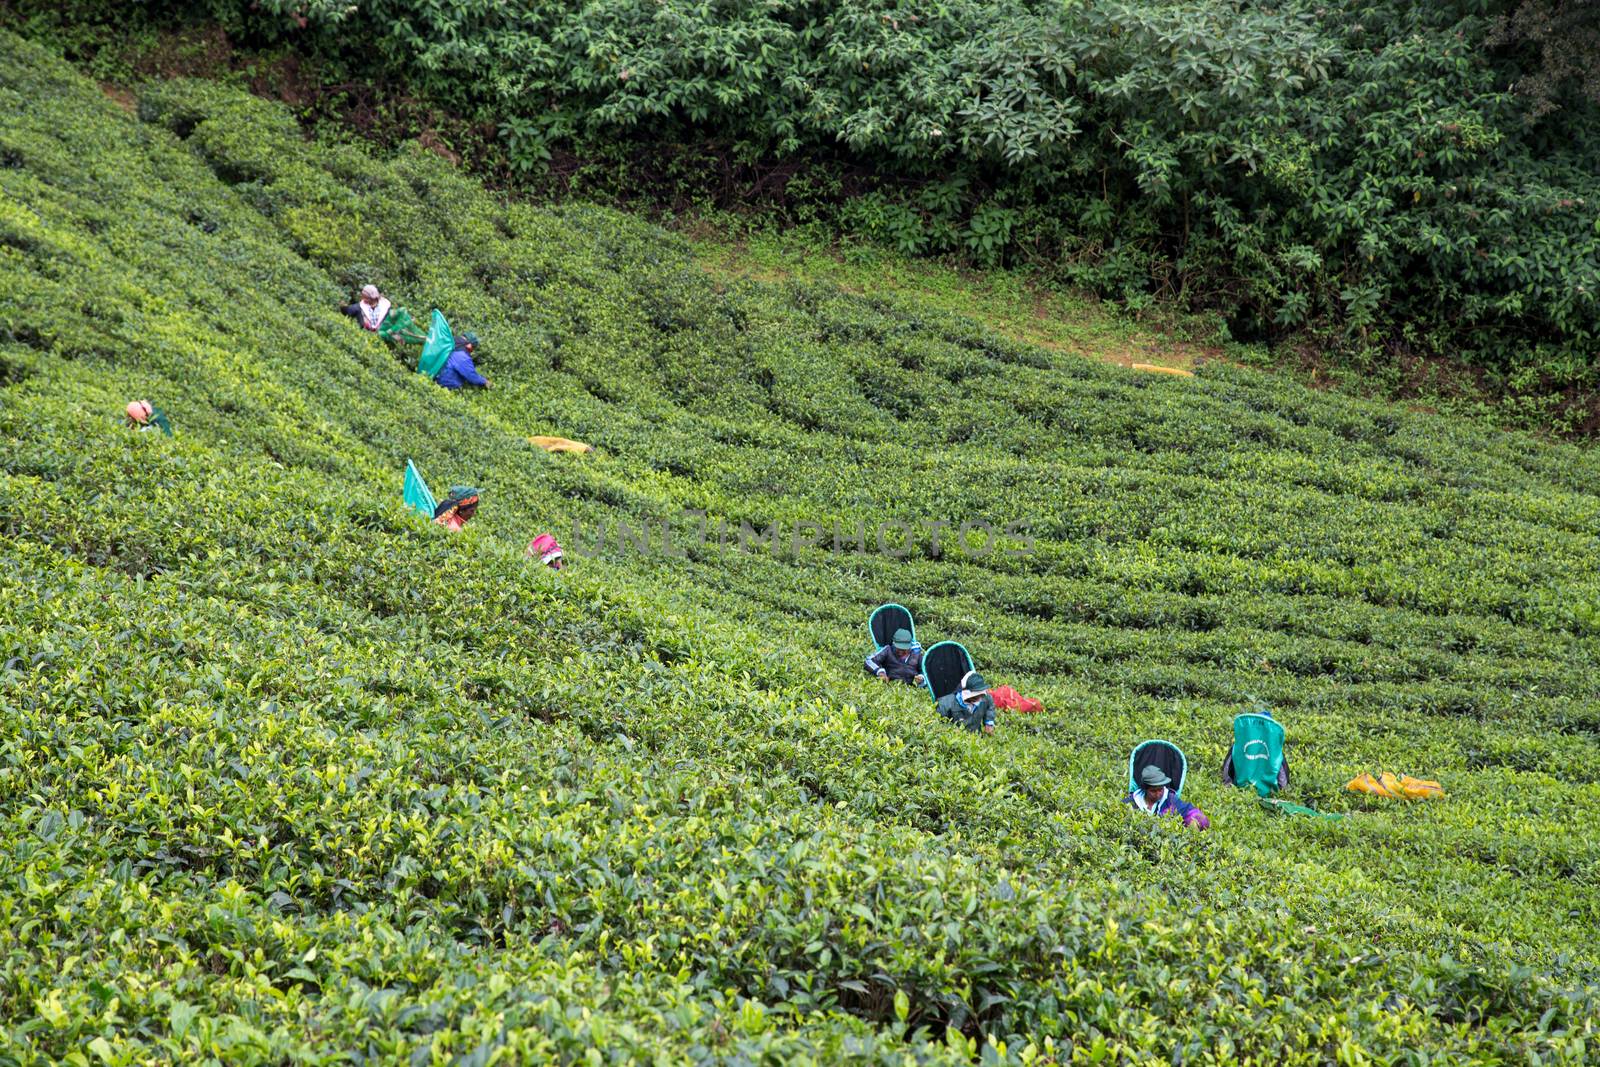 Tea plantation workers in Nuwara Eliya, Sri Lanka by oliverfoerstner